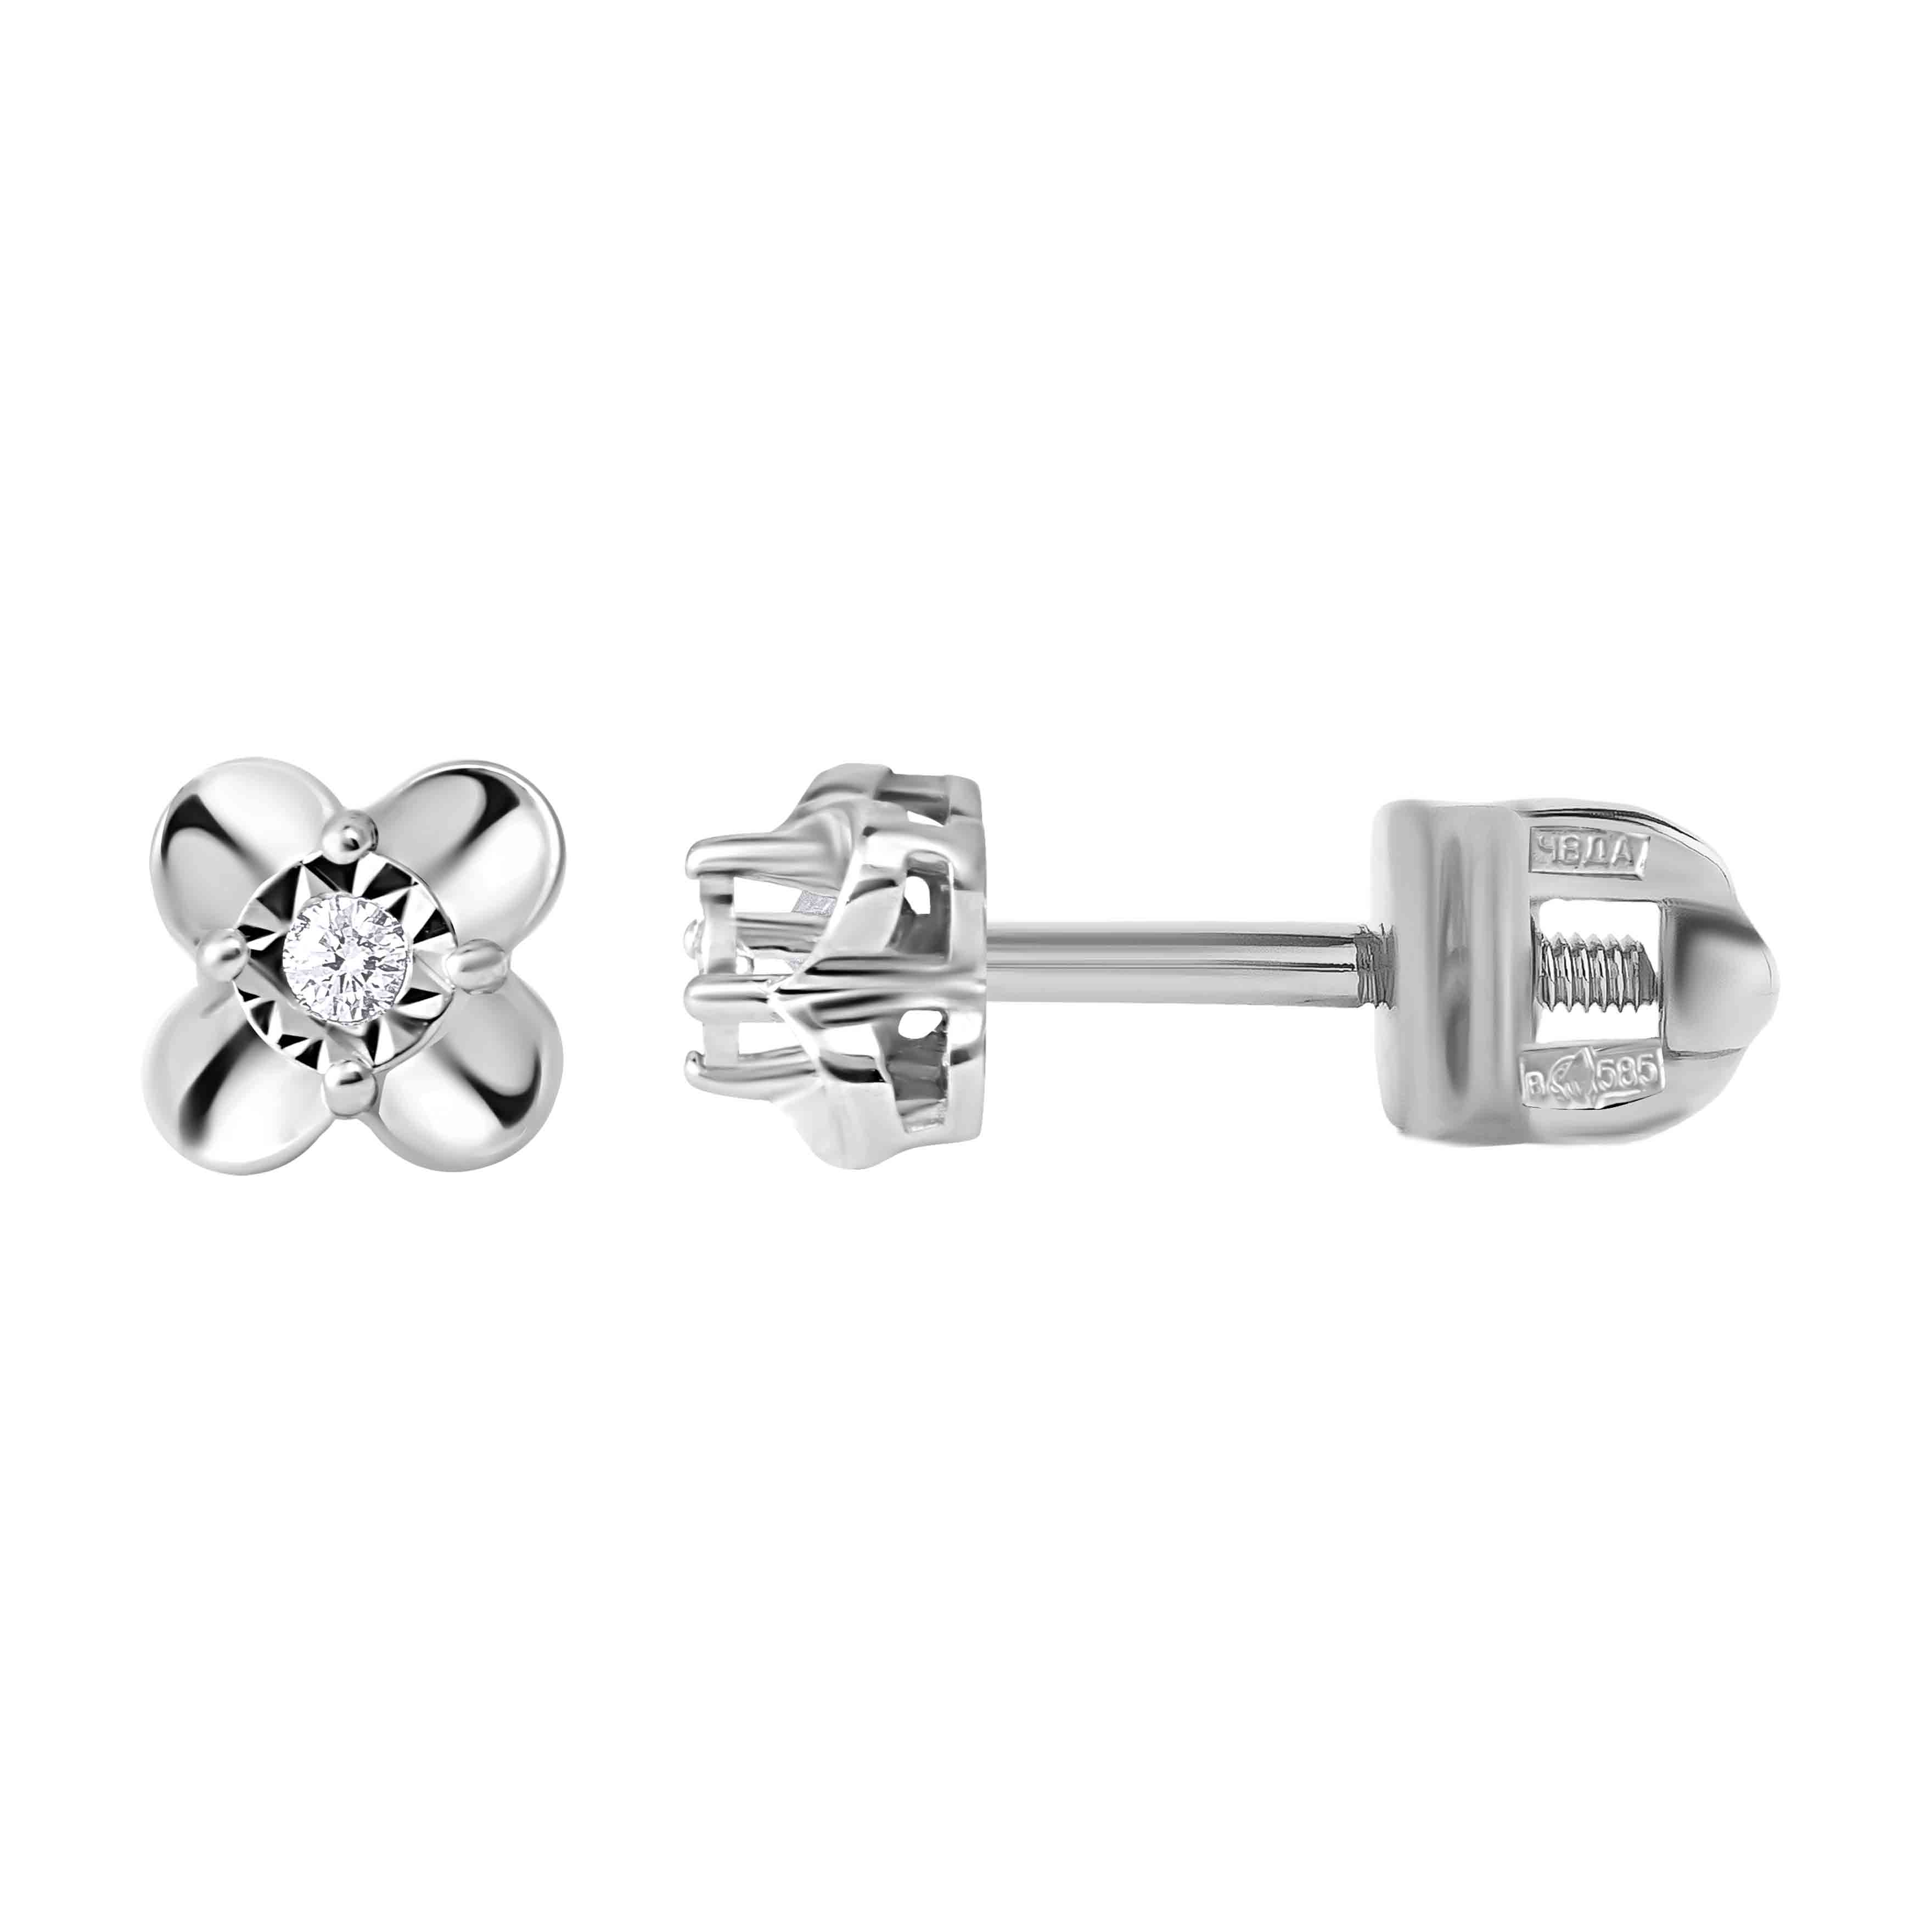 Kids' Earrings - Stud Earrings. Certified 585 White Gold, Rhodium, Screw  Backs. '4 Petals' Diamond Stud Earrings for Teens